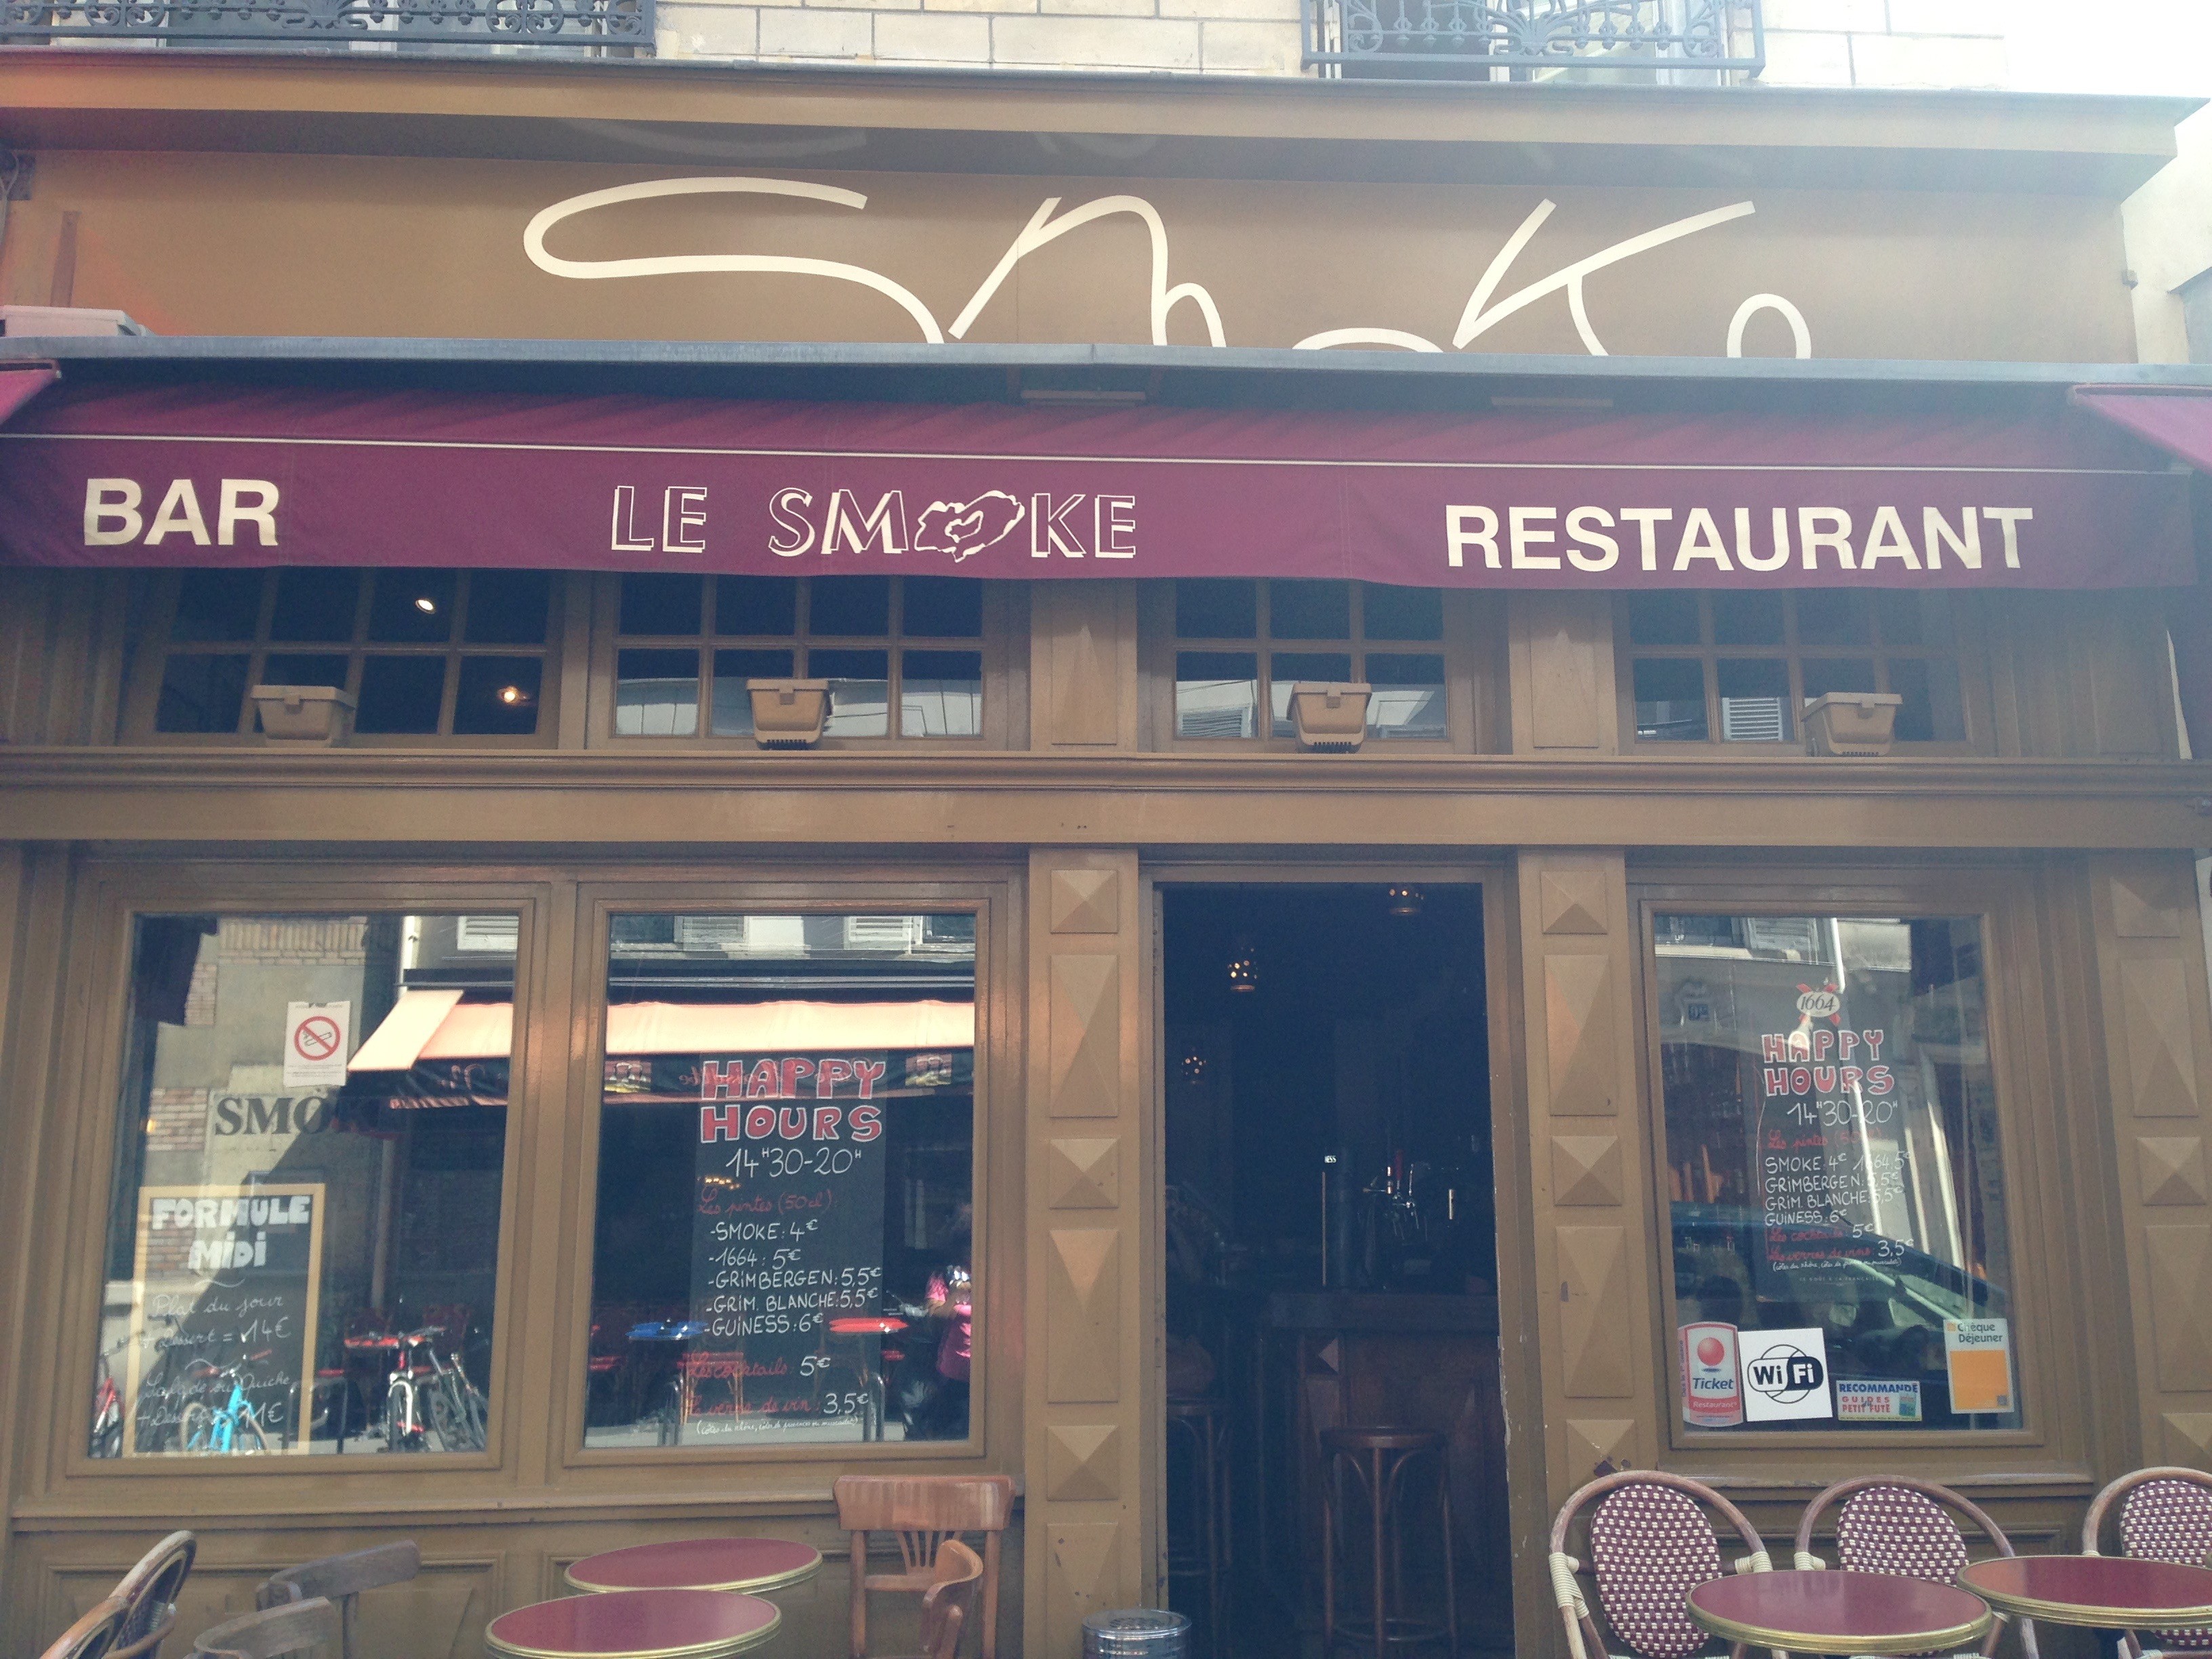 Le Smoke, Bar and Restaurant, Paris